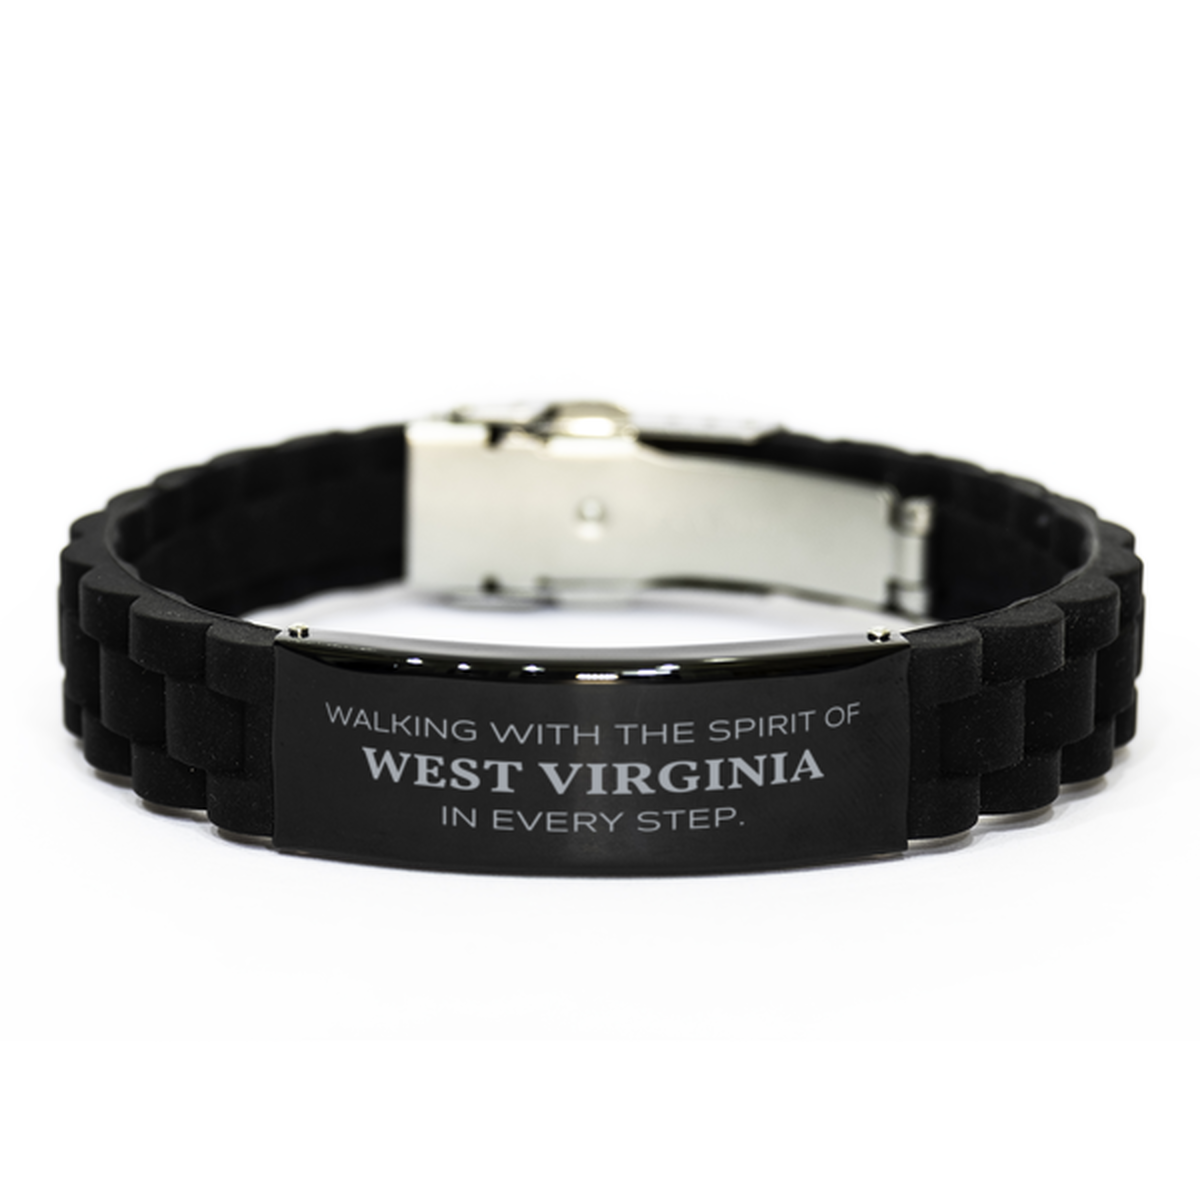 West Virginia Gifts, Walking with the spirit, Love West Virginia Birthday Christmas Black Glidelock Clasp Bracelet For West Virginia People, Men, Women, Friends